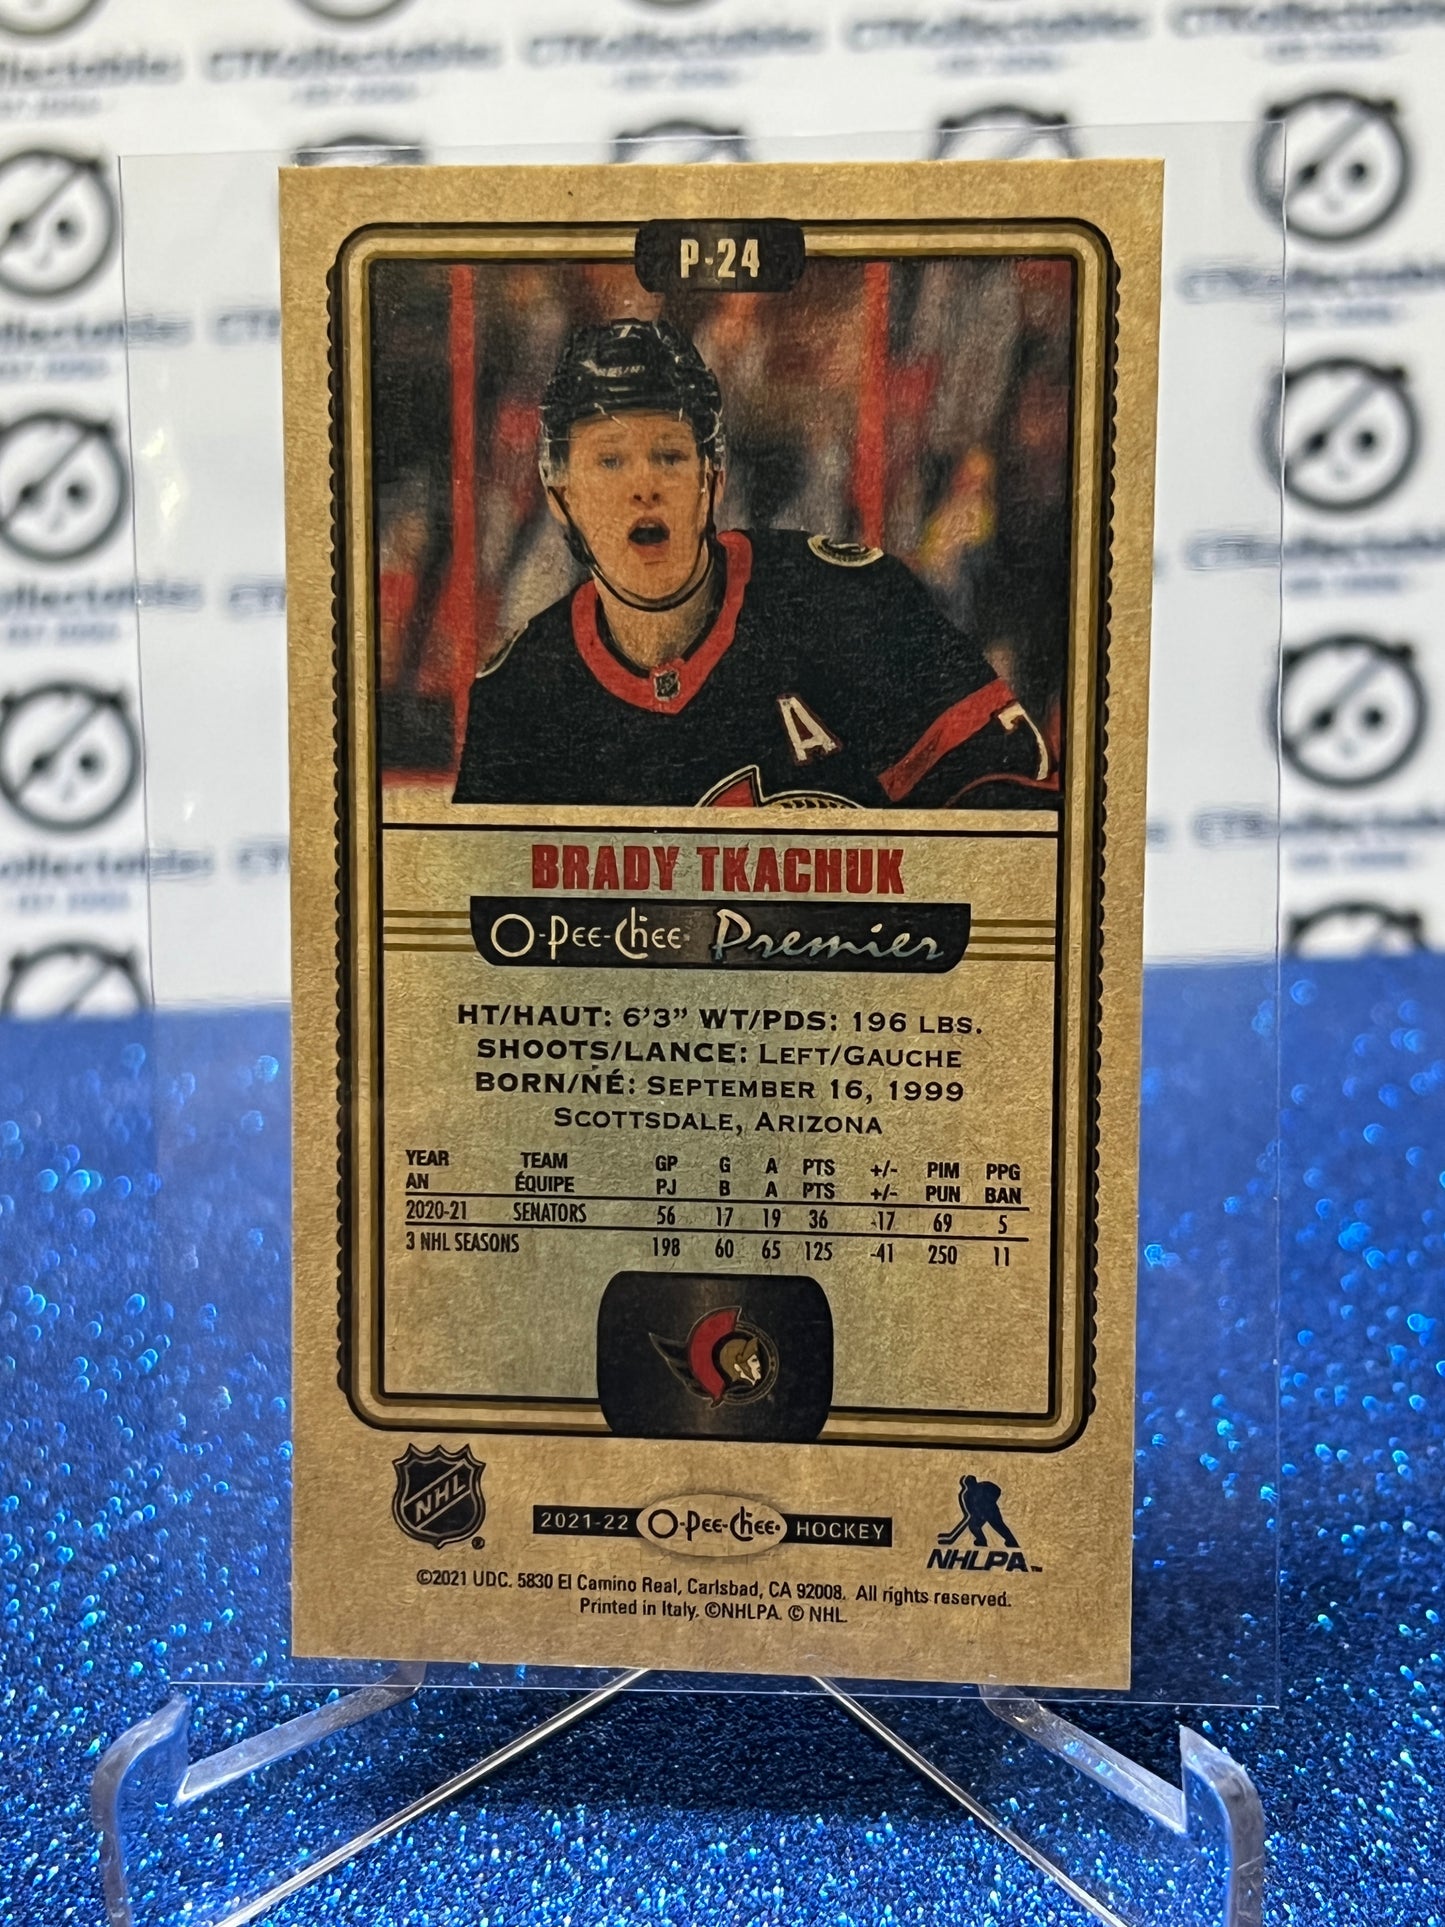 2021-22 O-PEE-CHEE PREMIER BRADY TKACHUK # P-24 TALLBOYS OTTAWA SENATORS NHL HOCKEY CARD